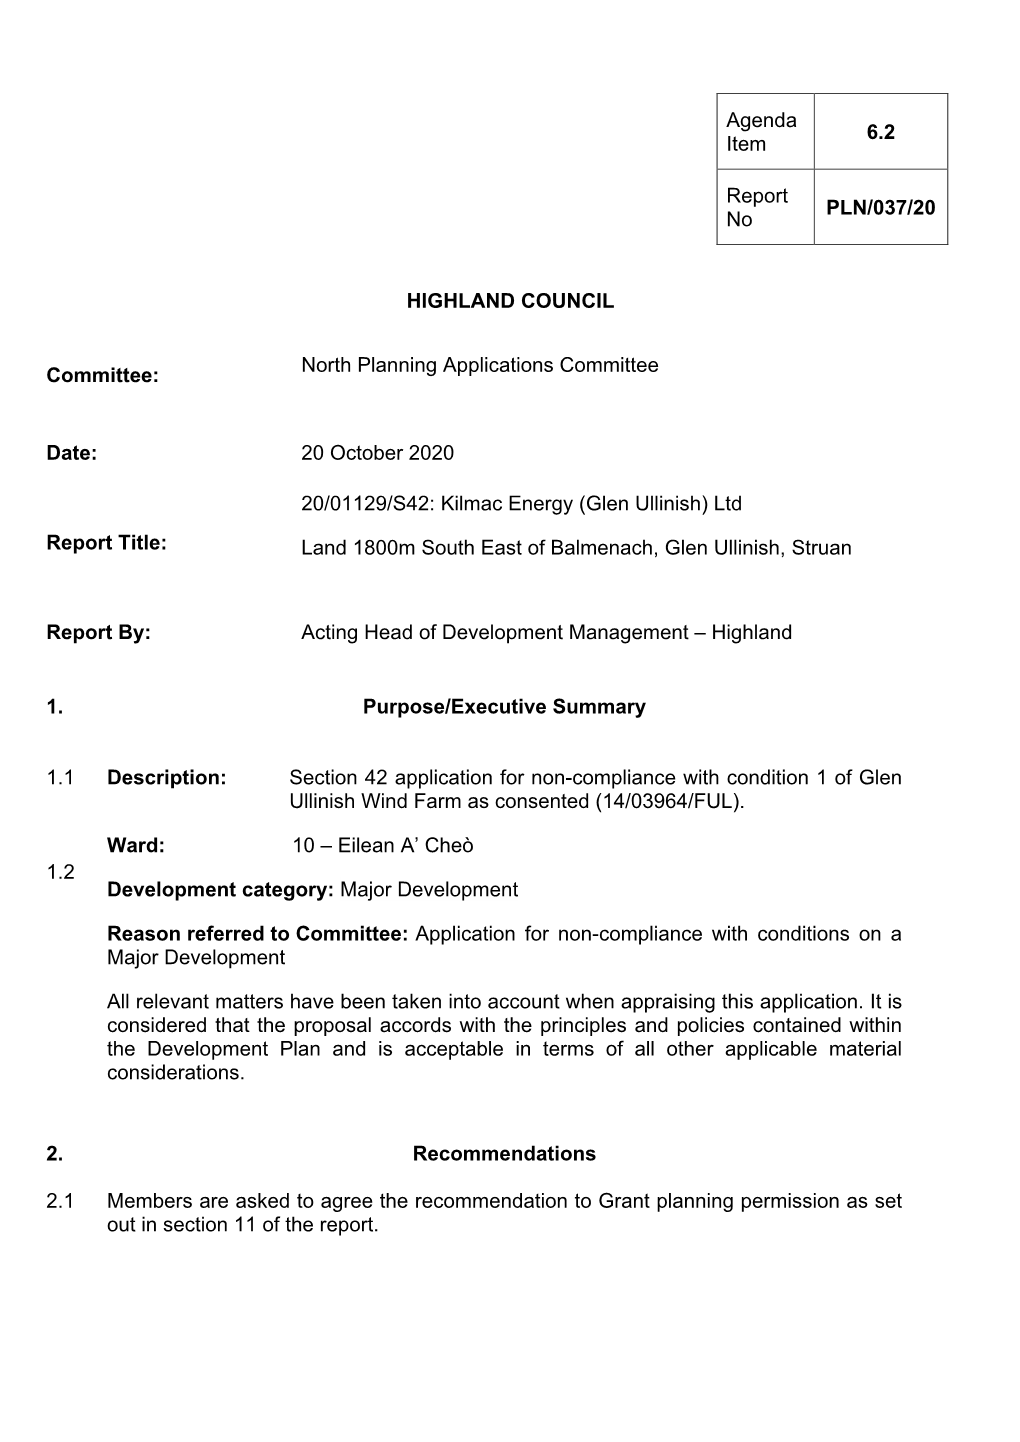 6.2 Applicant: Kilmac Energy (Glen Ullinish) Ltd (20/01129/S42)